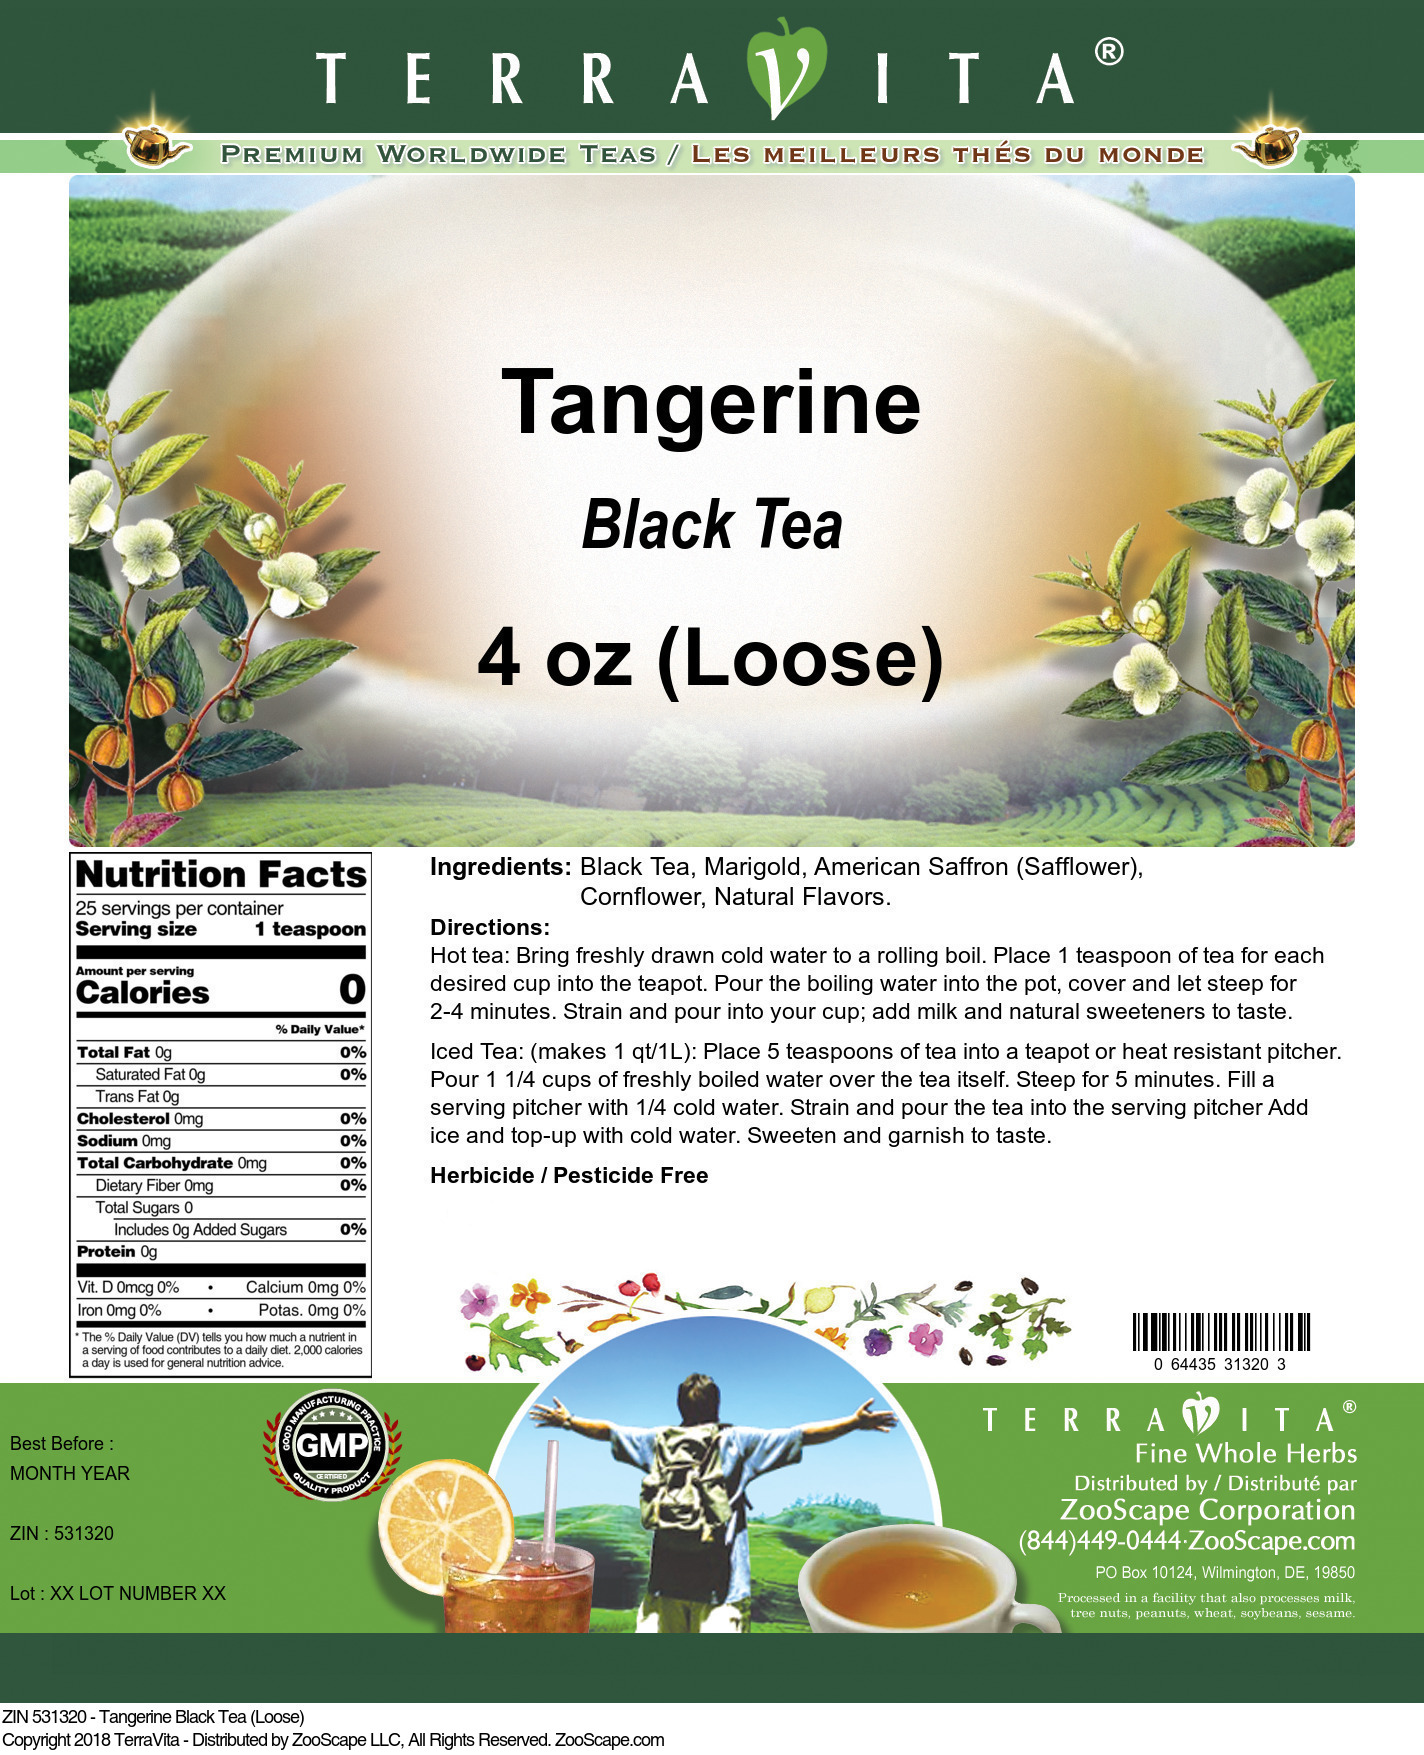 Tangerine Black Tea (Loose) - Label